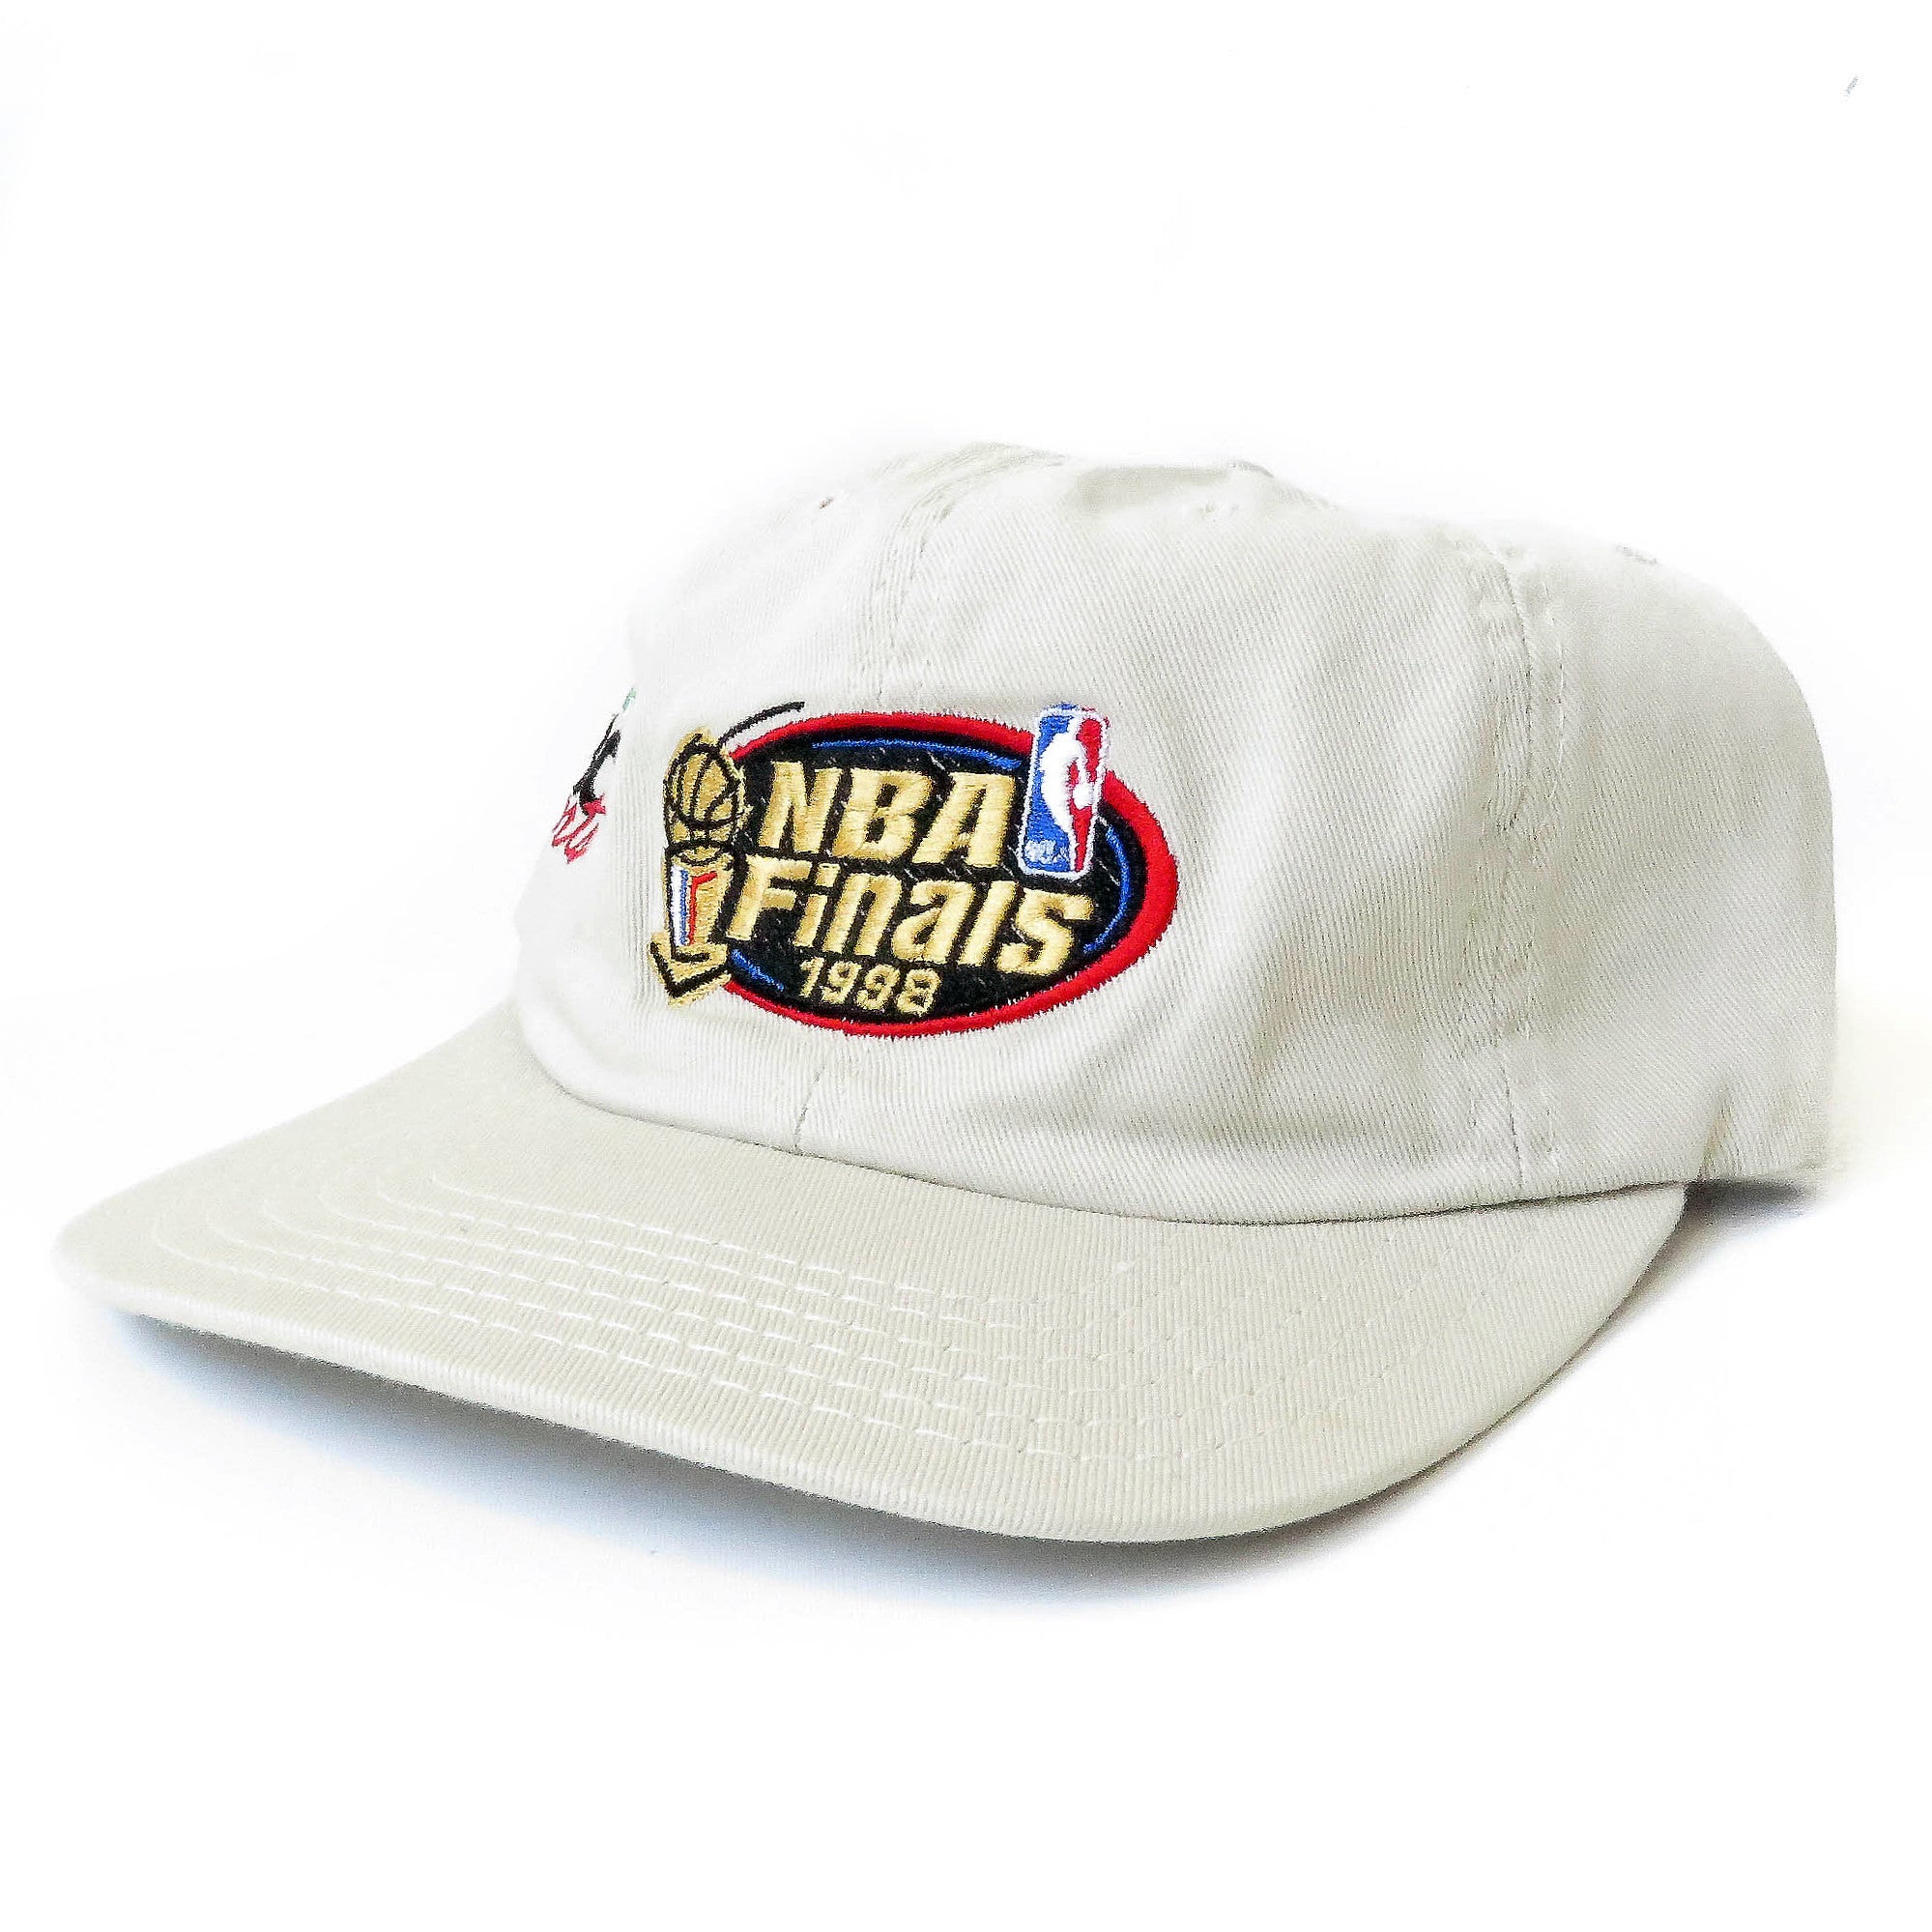 Vintage 1998 NBA Finals NBC Sports Strapback Hat – Snap Goes My Cap